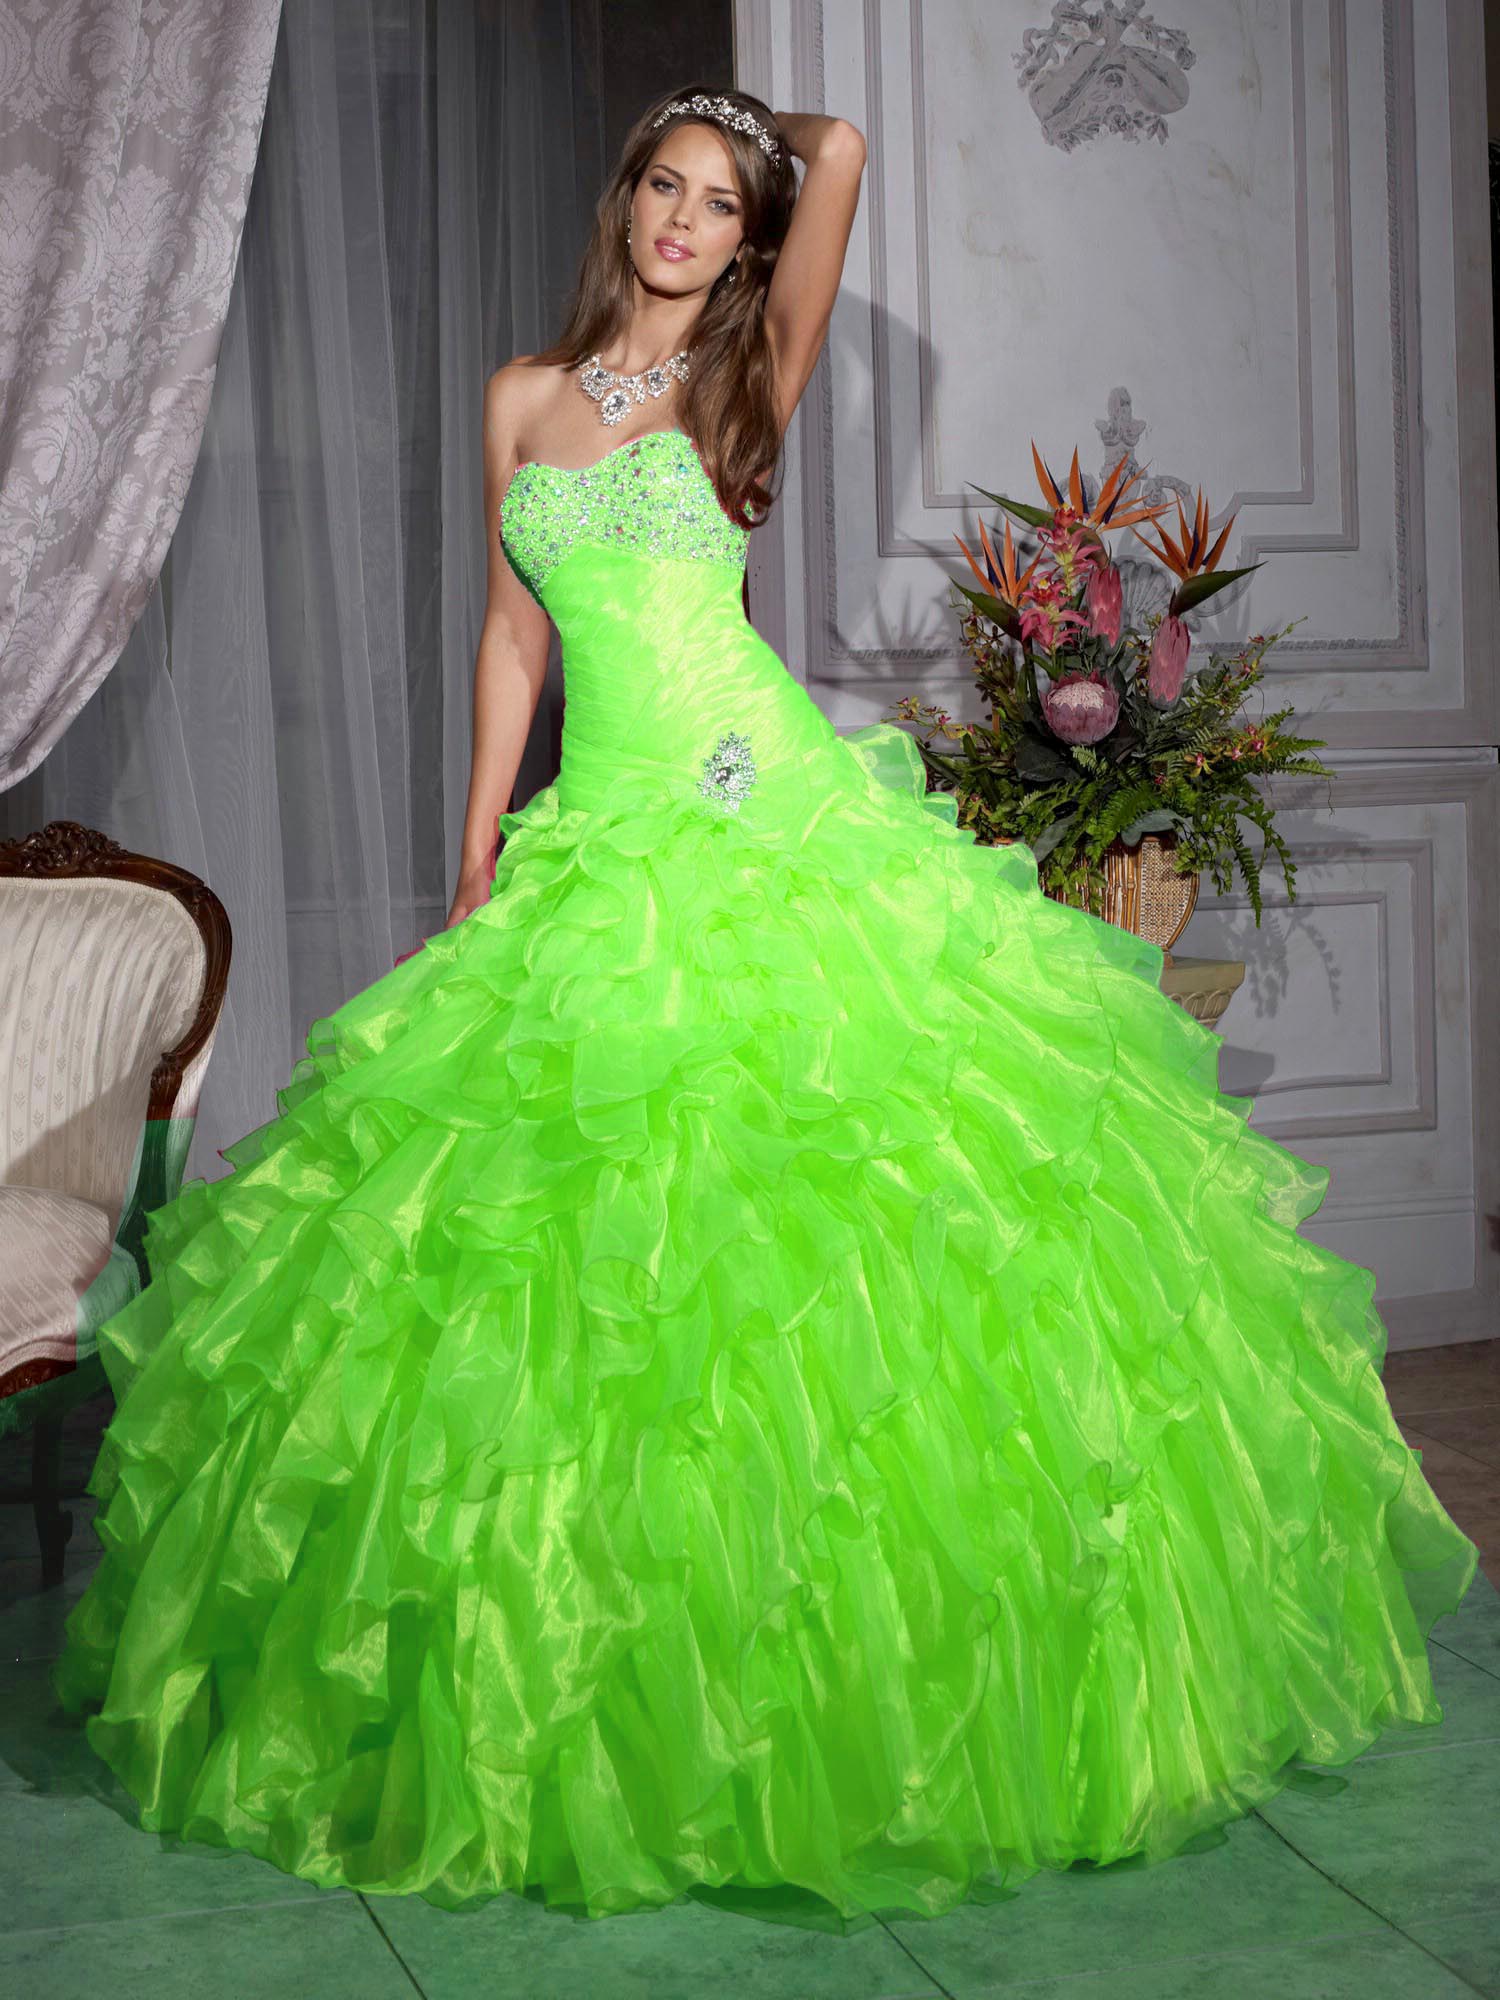 Stunning off the shoulder emerald quince dress | Quince dresses - Mihanagi